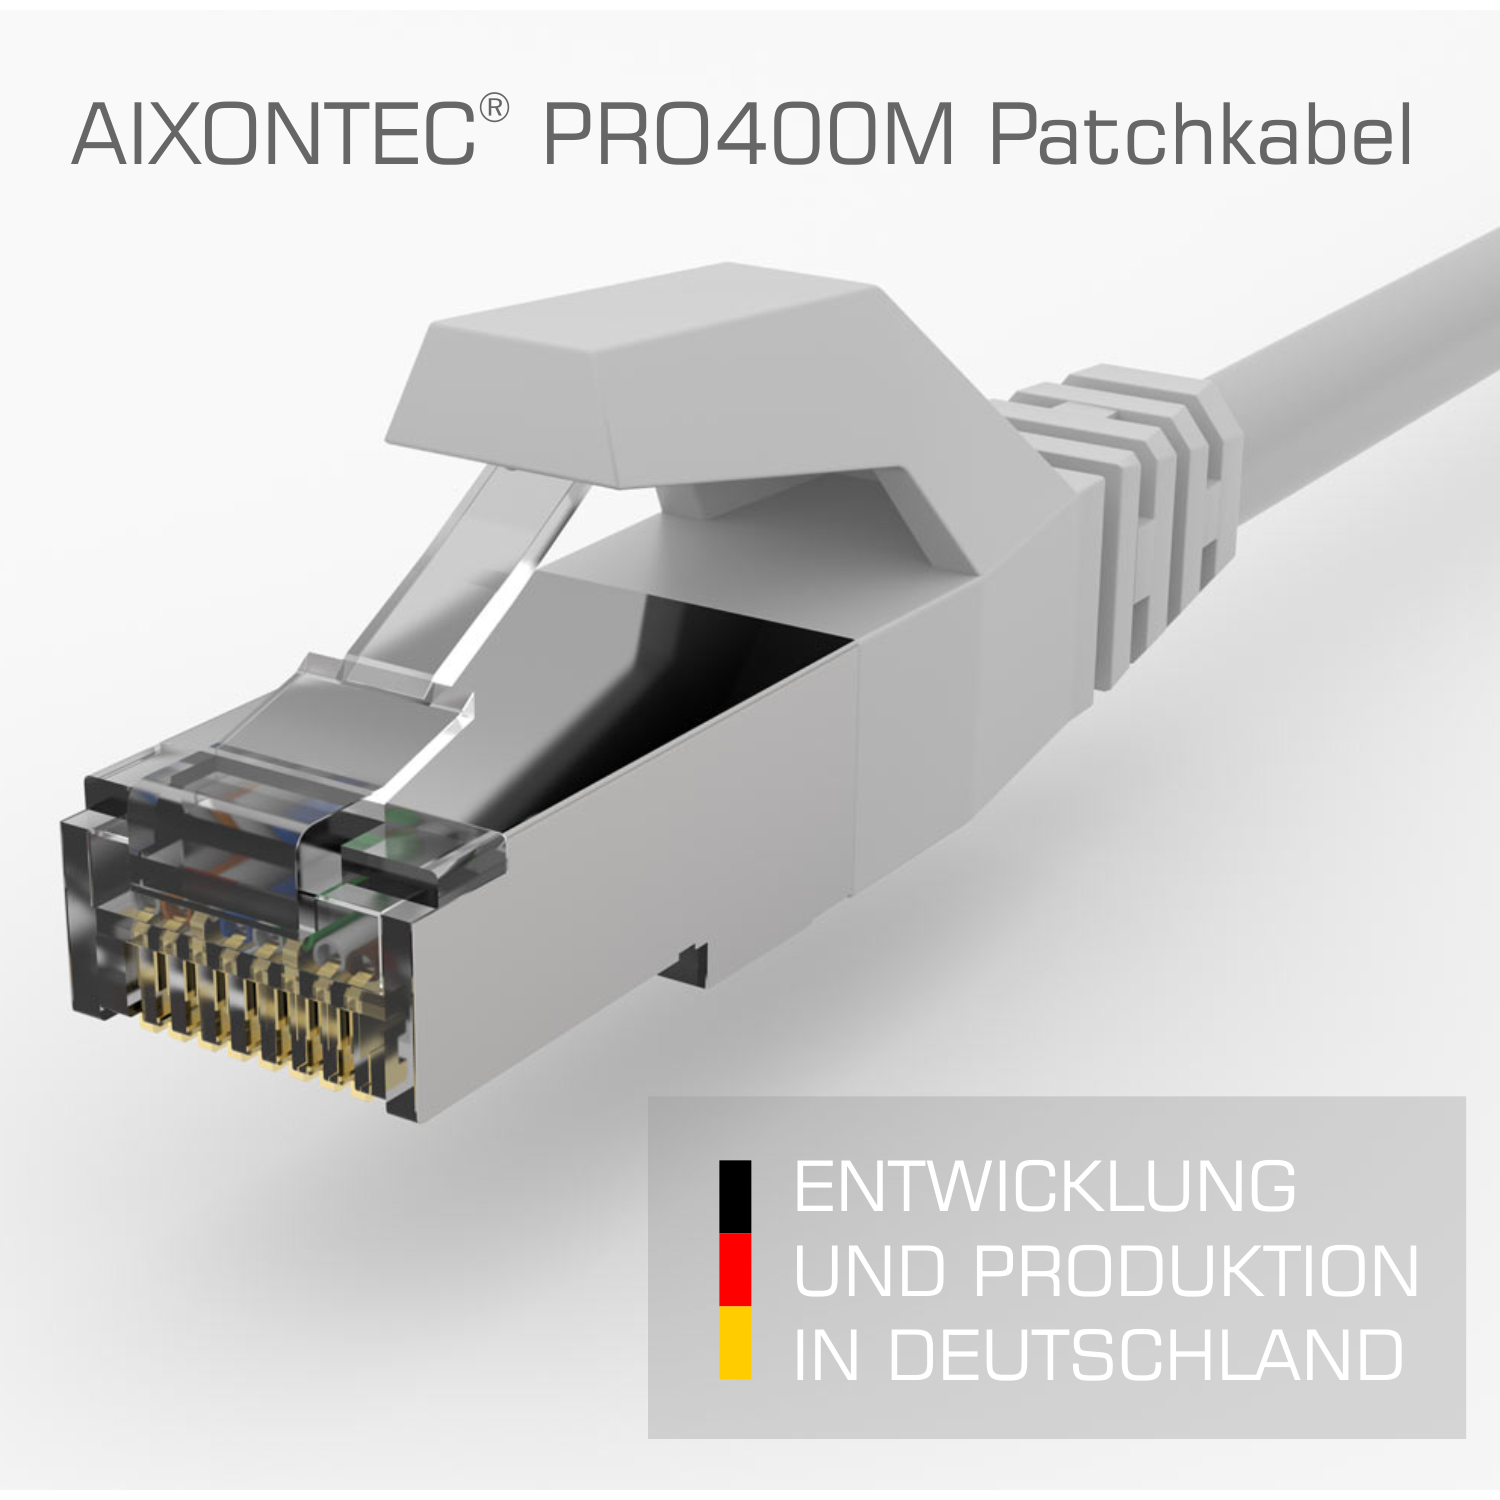 Gigabit, 2x 1,0m Netzwerkkabel, 10 Ethernetkabel m AIXONTEC Lankabel RJ45 1,0 Cat.6 Patchkabel